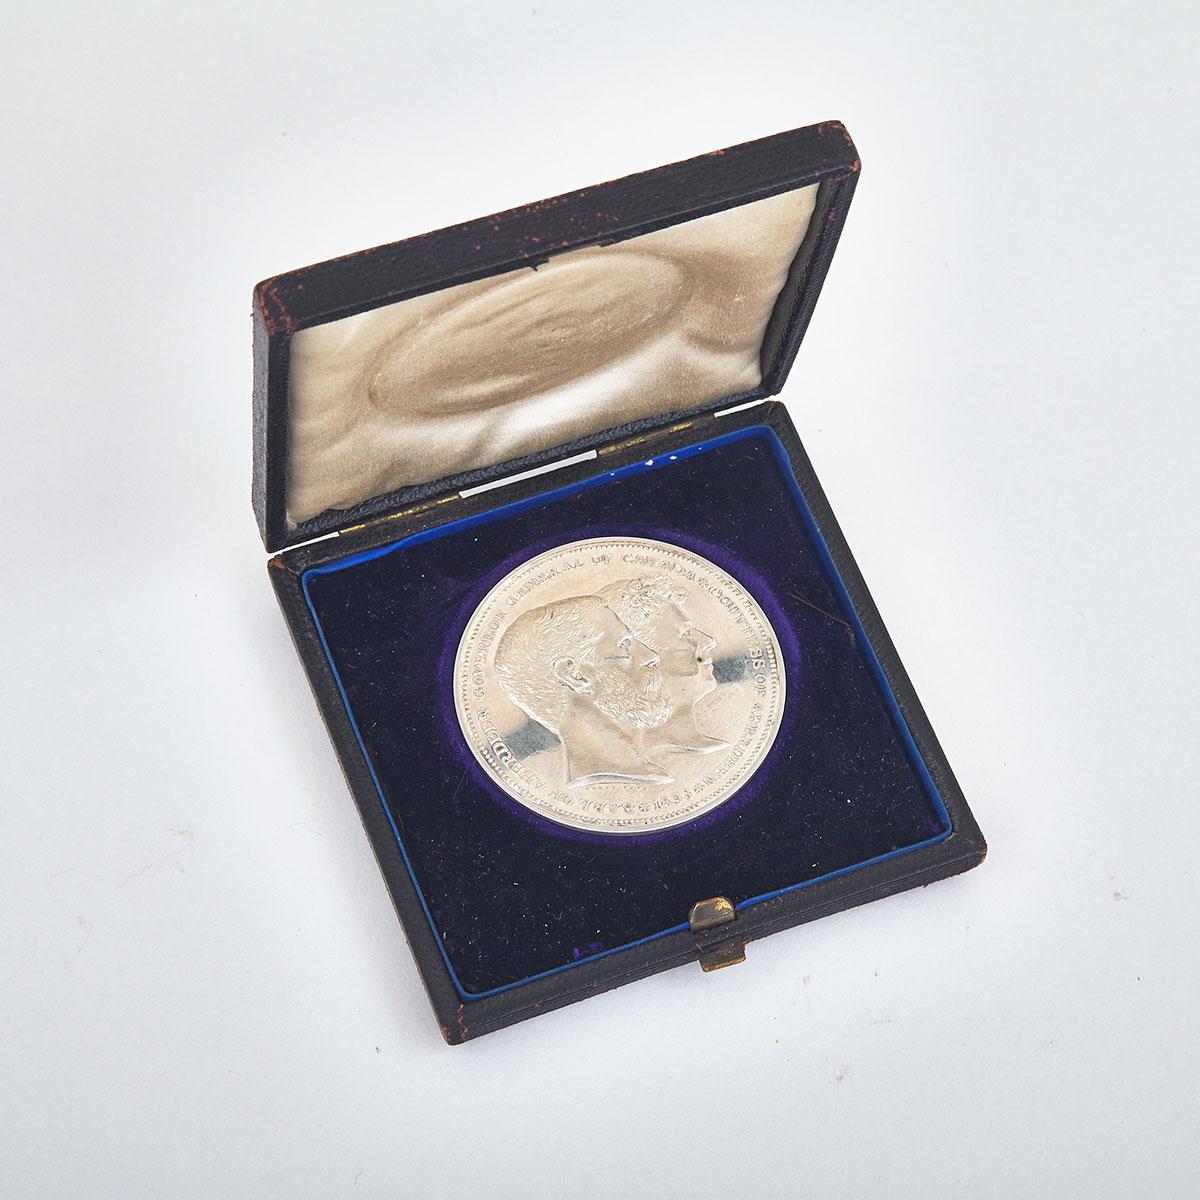 Canadian Governor General’s Award Silver Medal, 1893